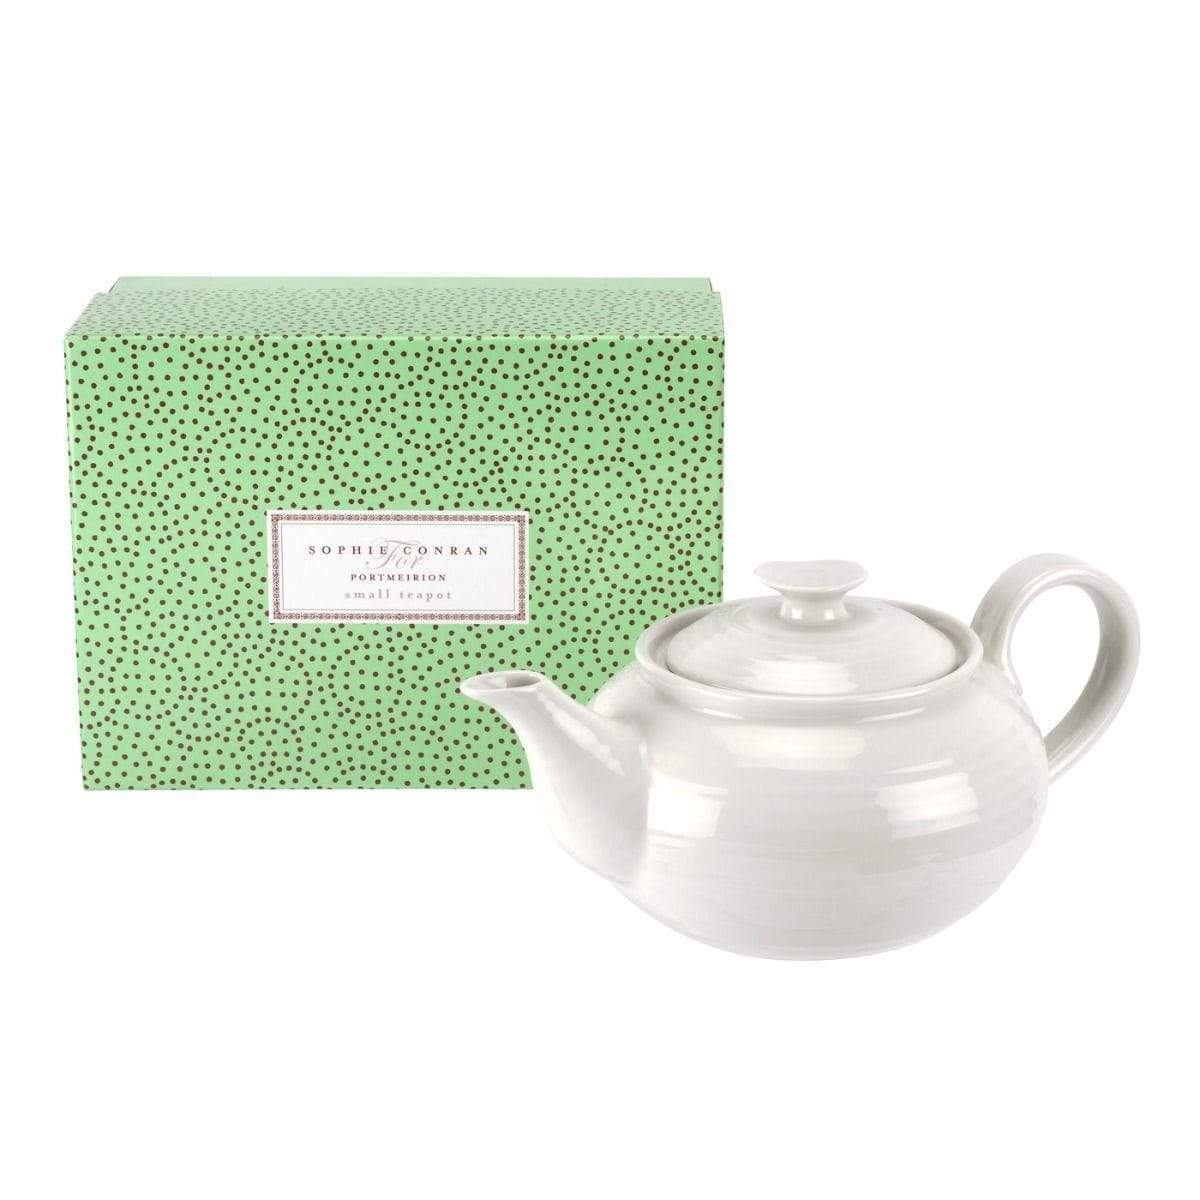 Sophie Conran for Portmeirion White Teapot – 1 Pint